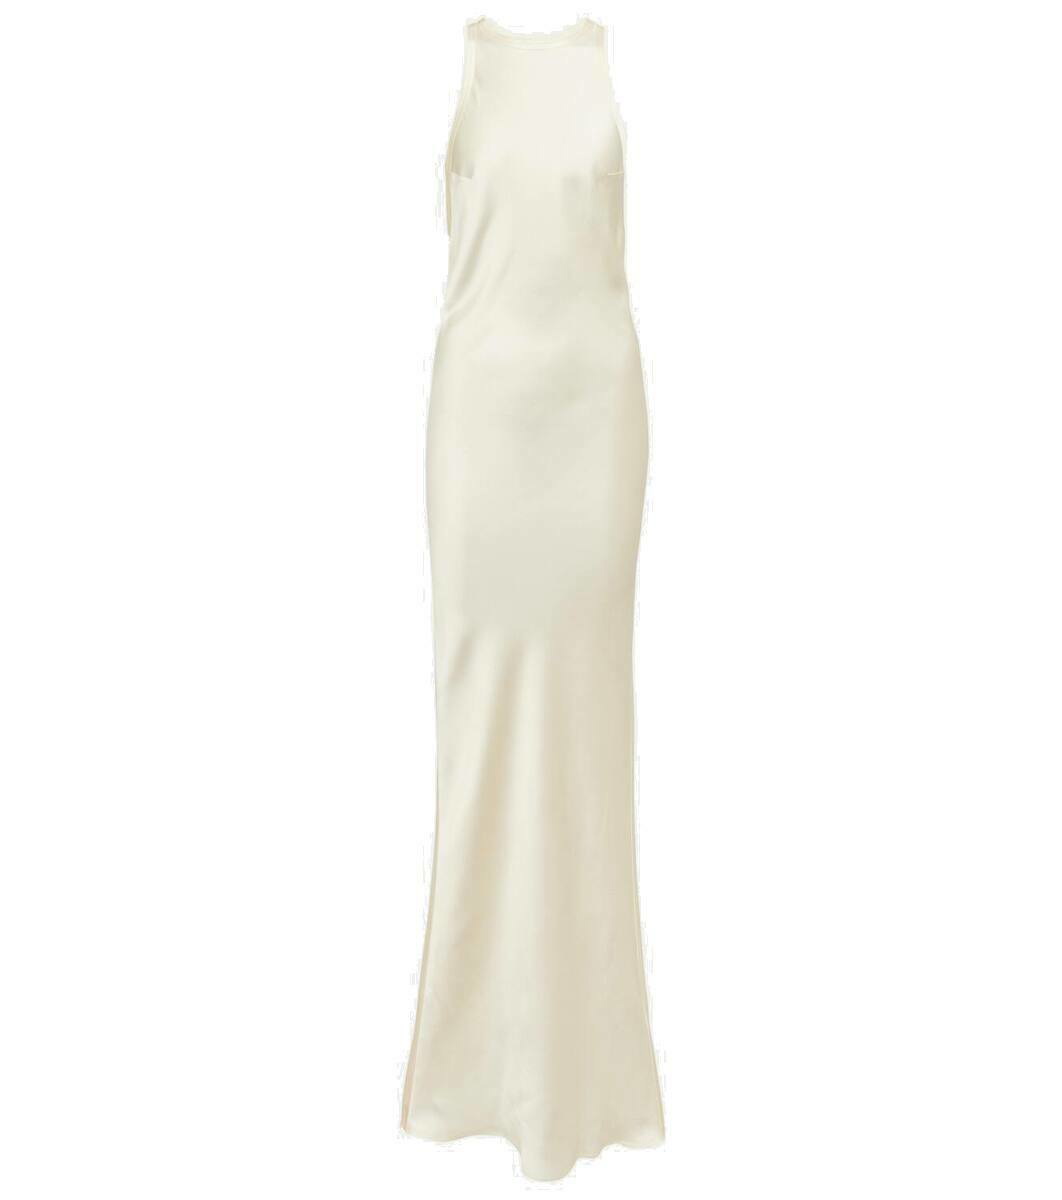 Satin slip dress in white - Victoria Beckham